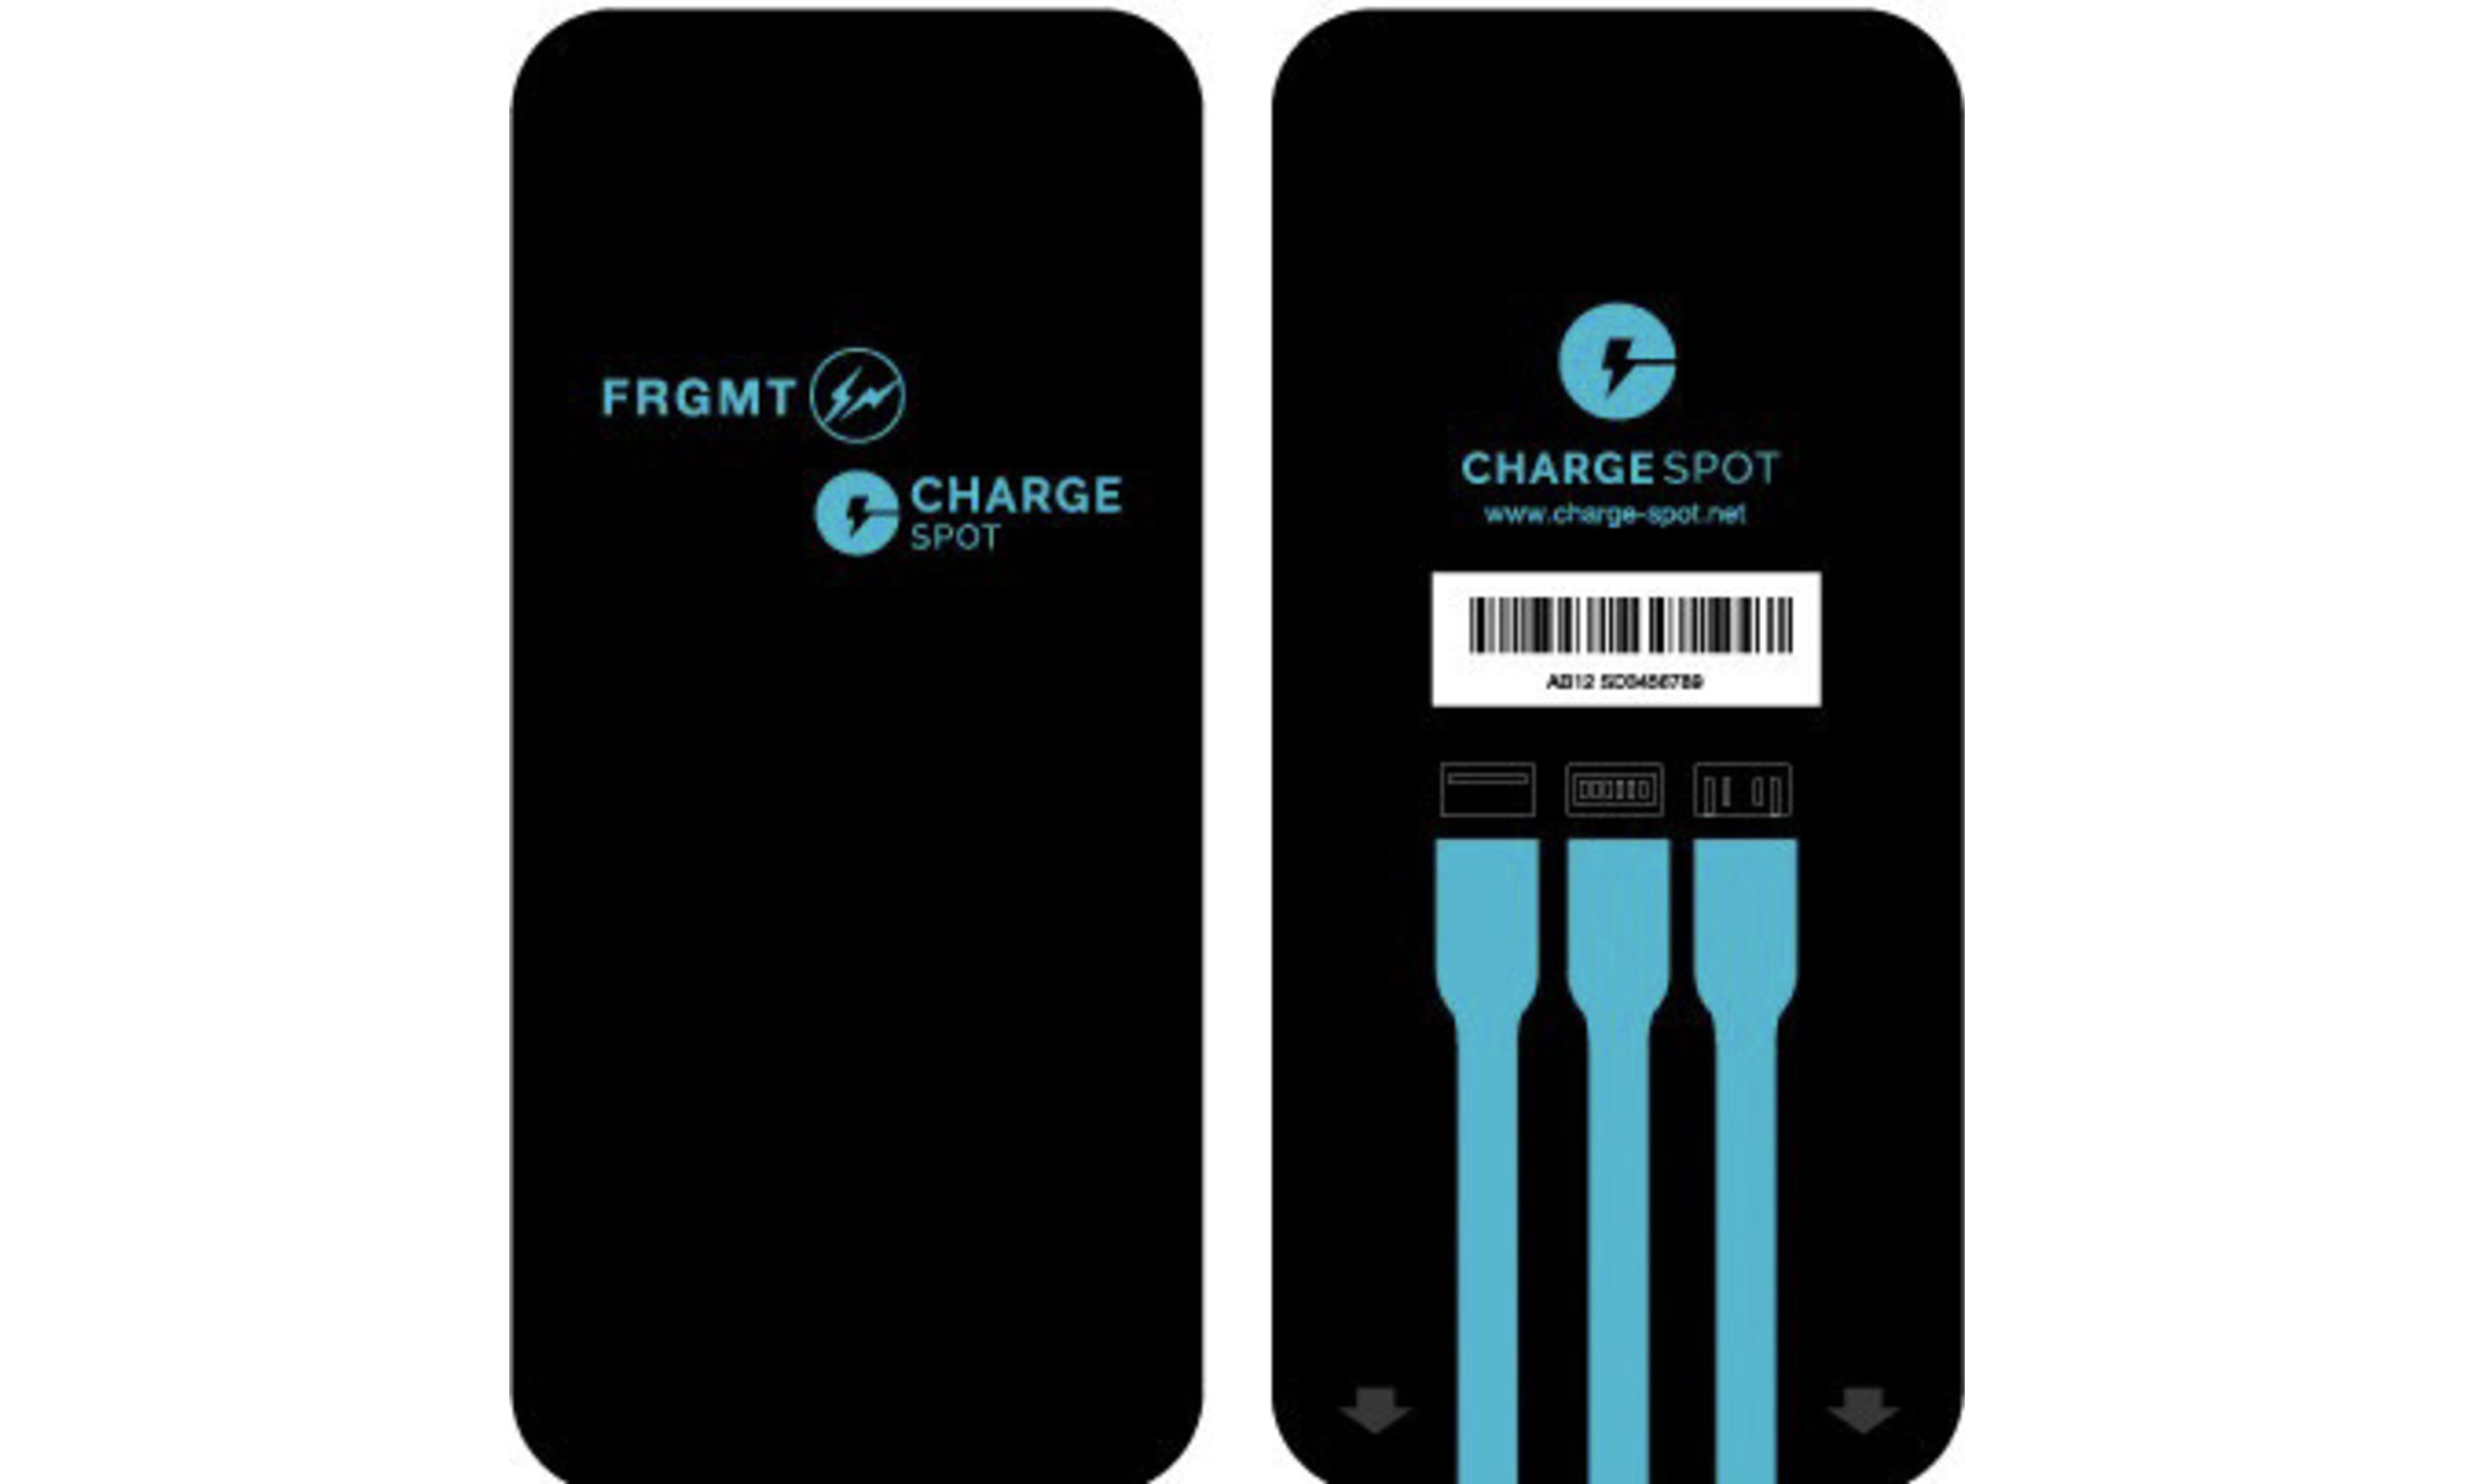 「可以借」的闪电，ChargeSPOT x fragment design 联名共享充电宝发布